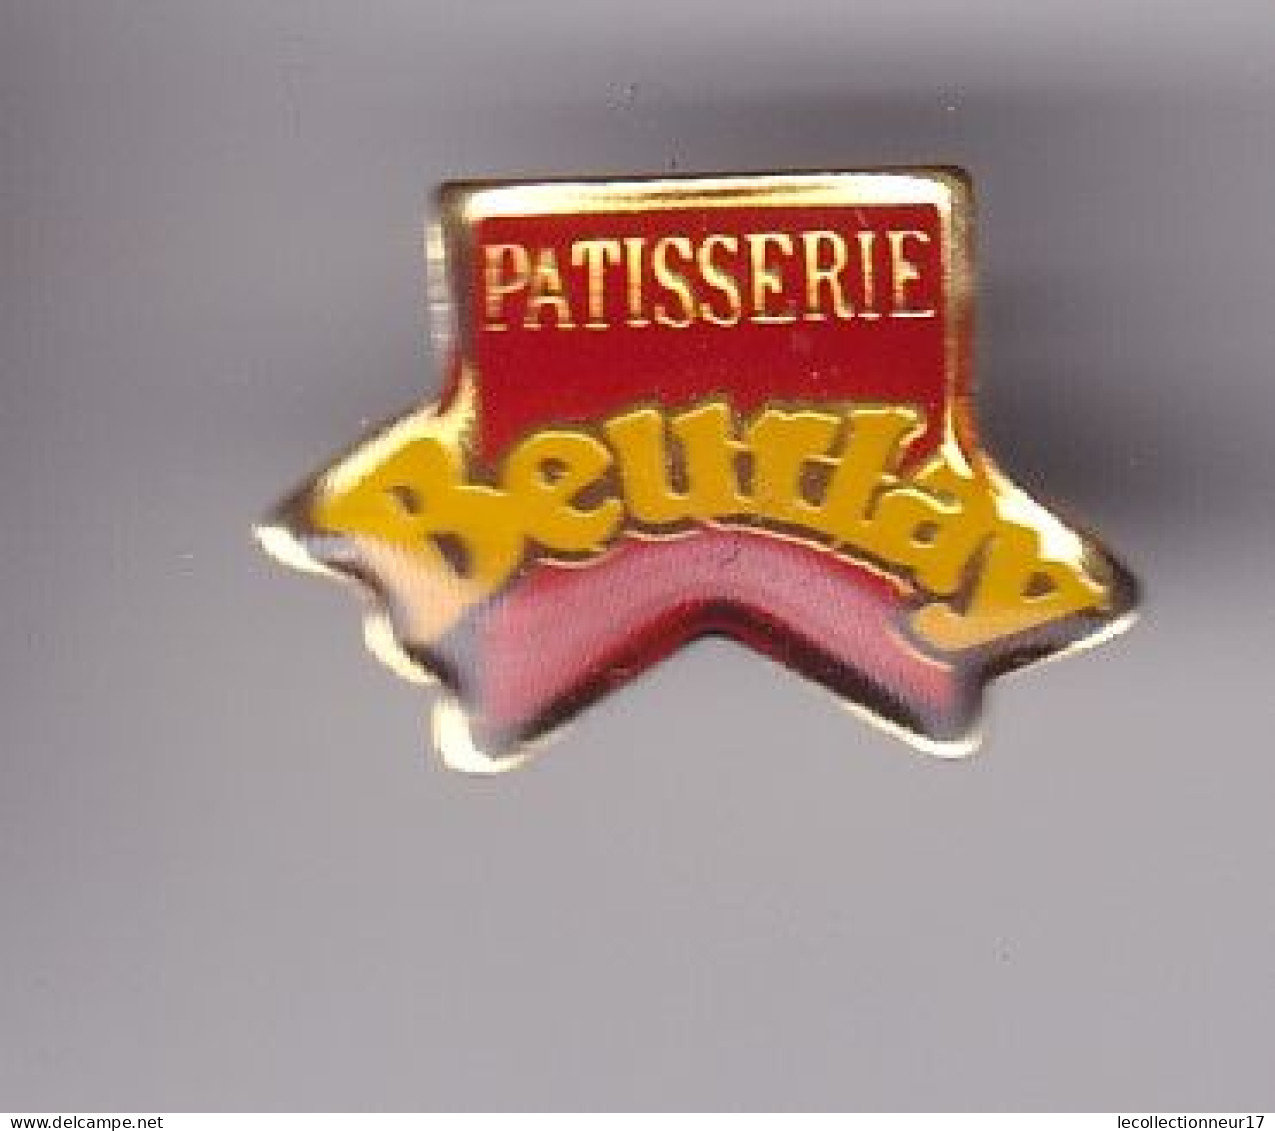 Pin's Patisserie Beurlay En Charente Maritime Dpt 17 Réf 8510 - Städte